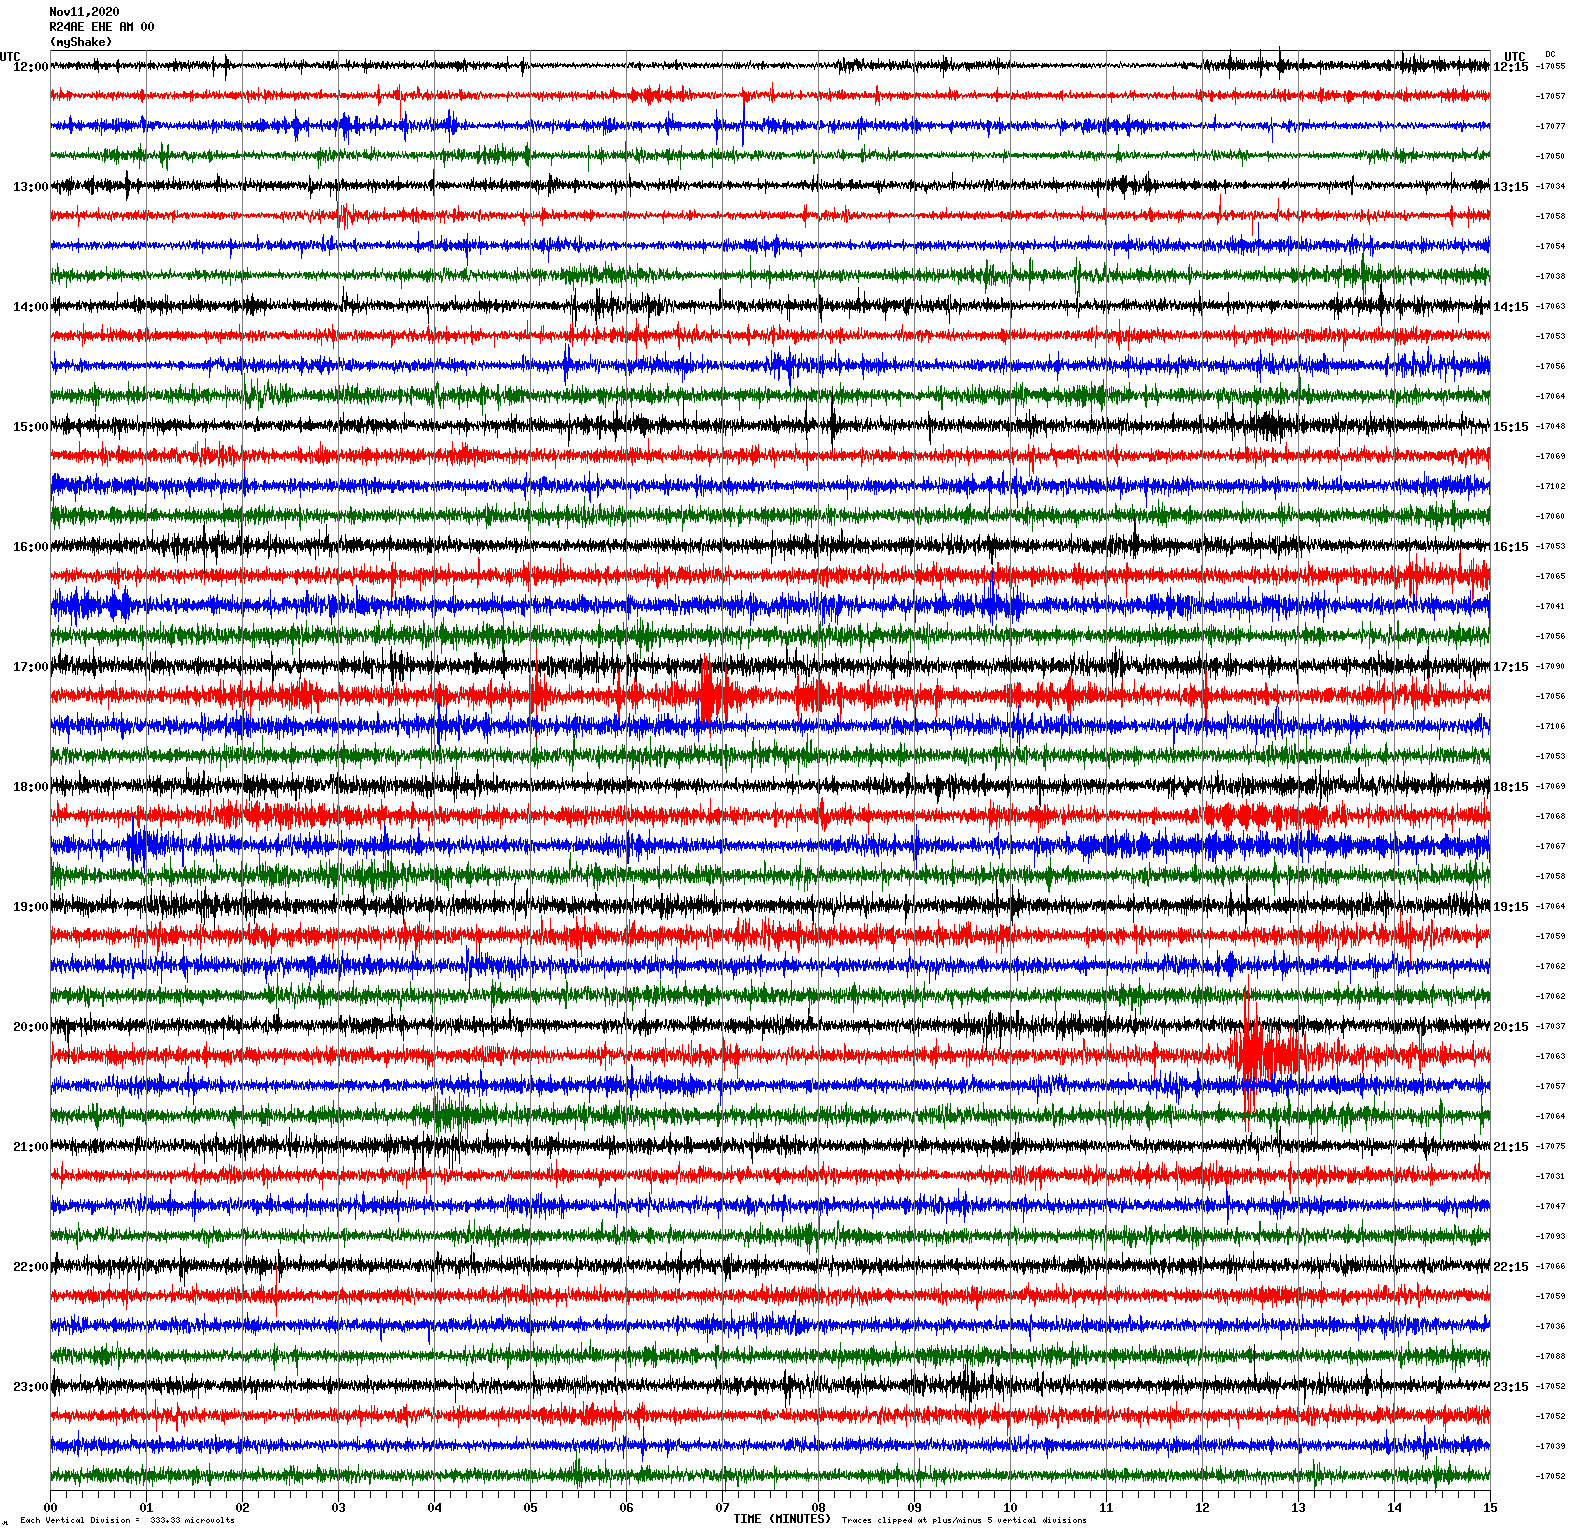 /seismic-data/R24AE/R24AE_EHE_AM_00.2020111112.gif